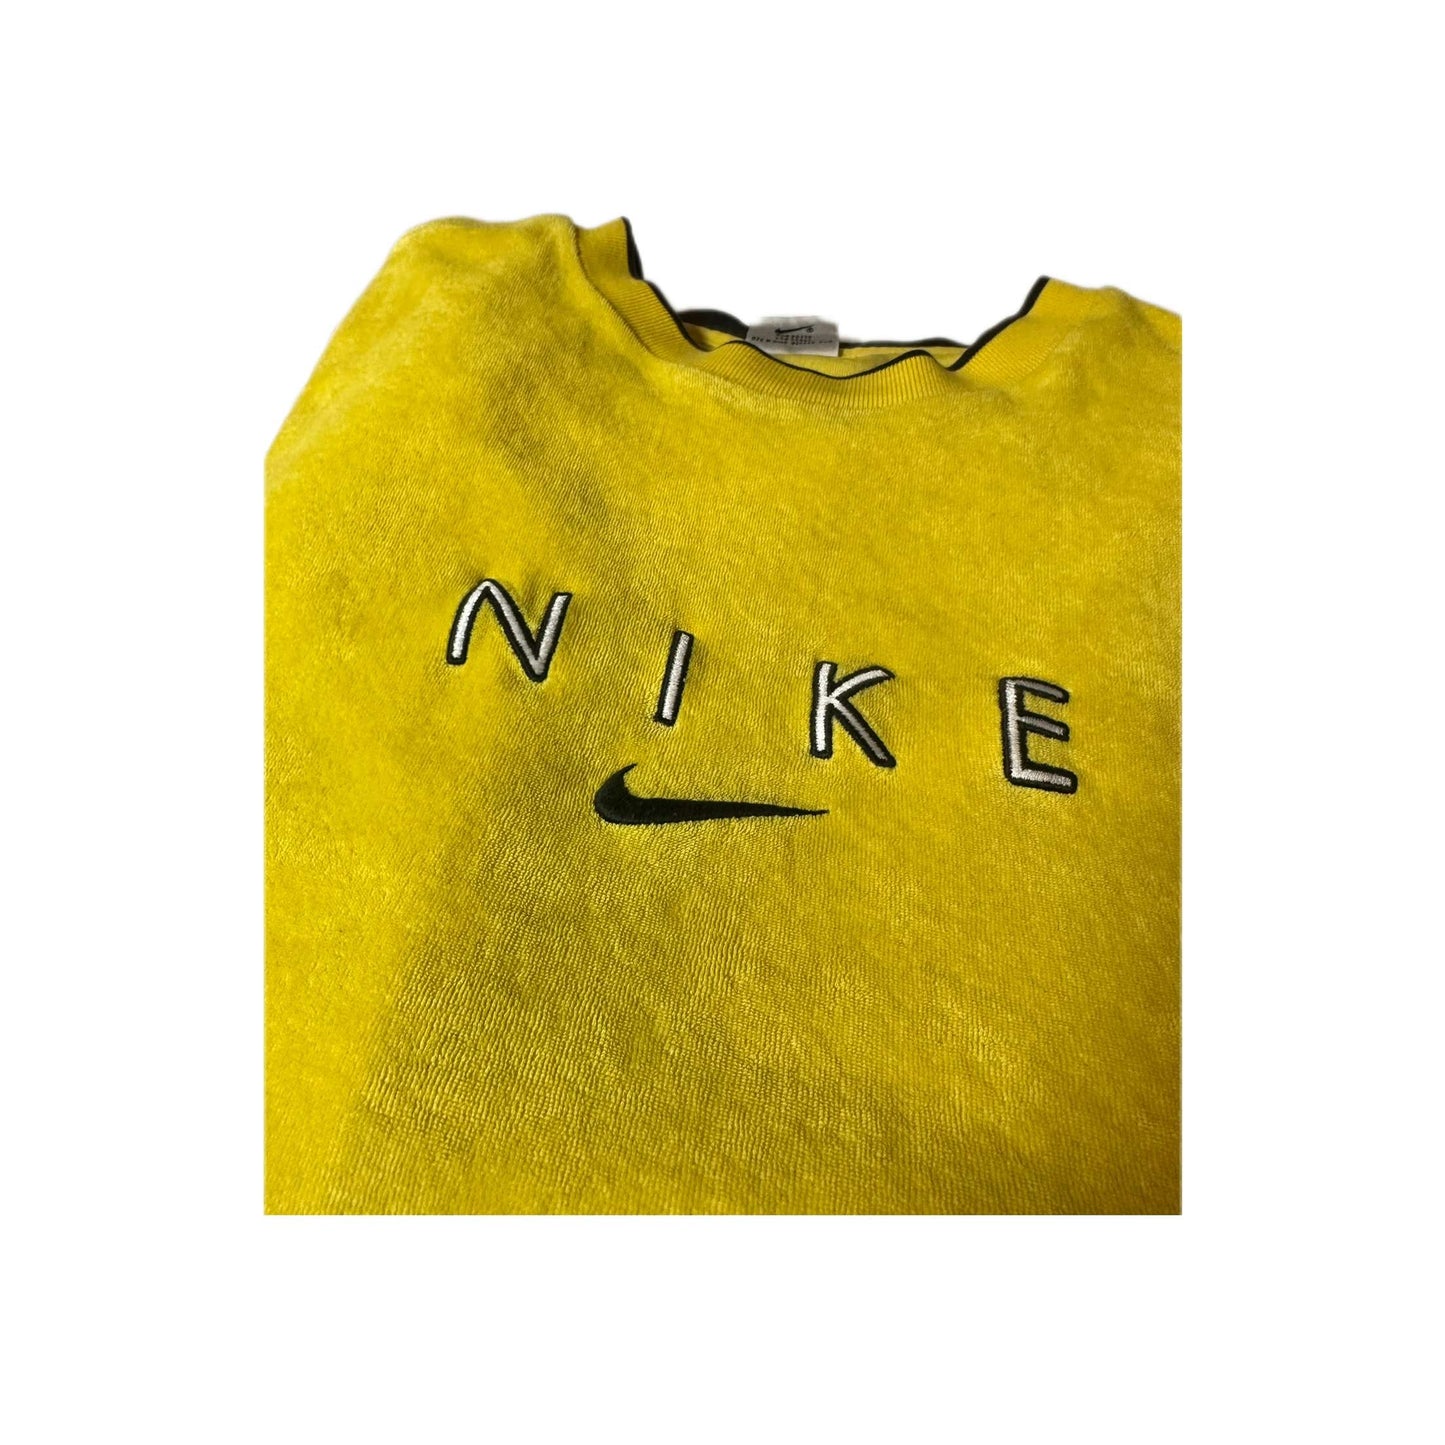 Nike vintage sweater yellow